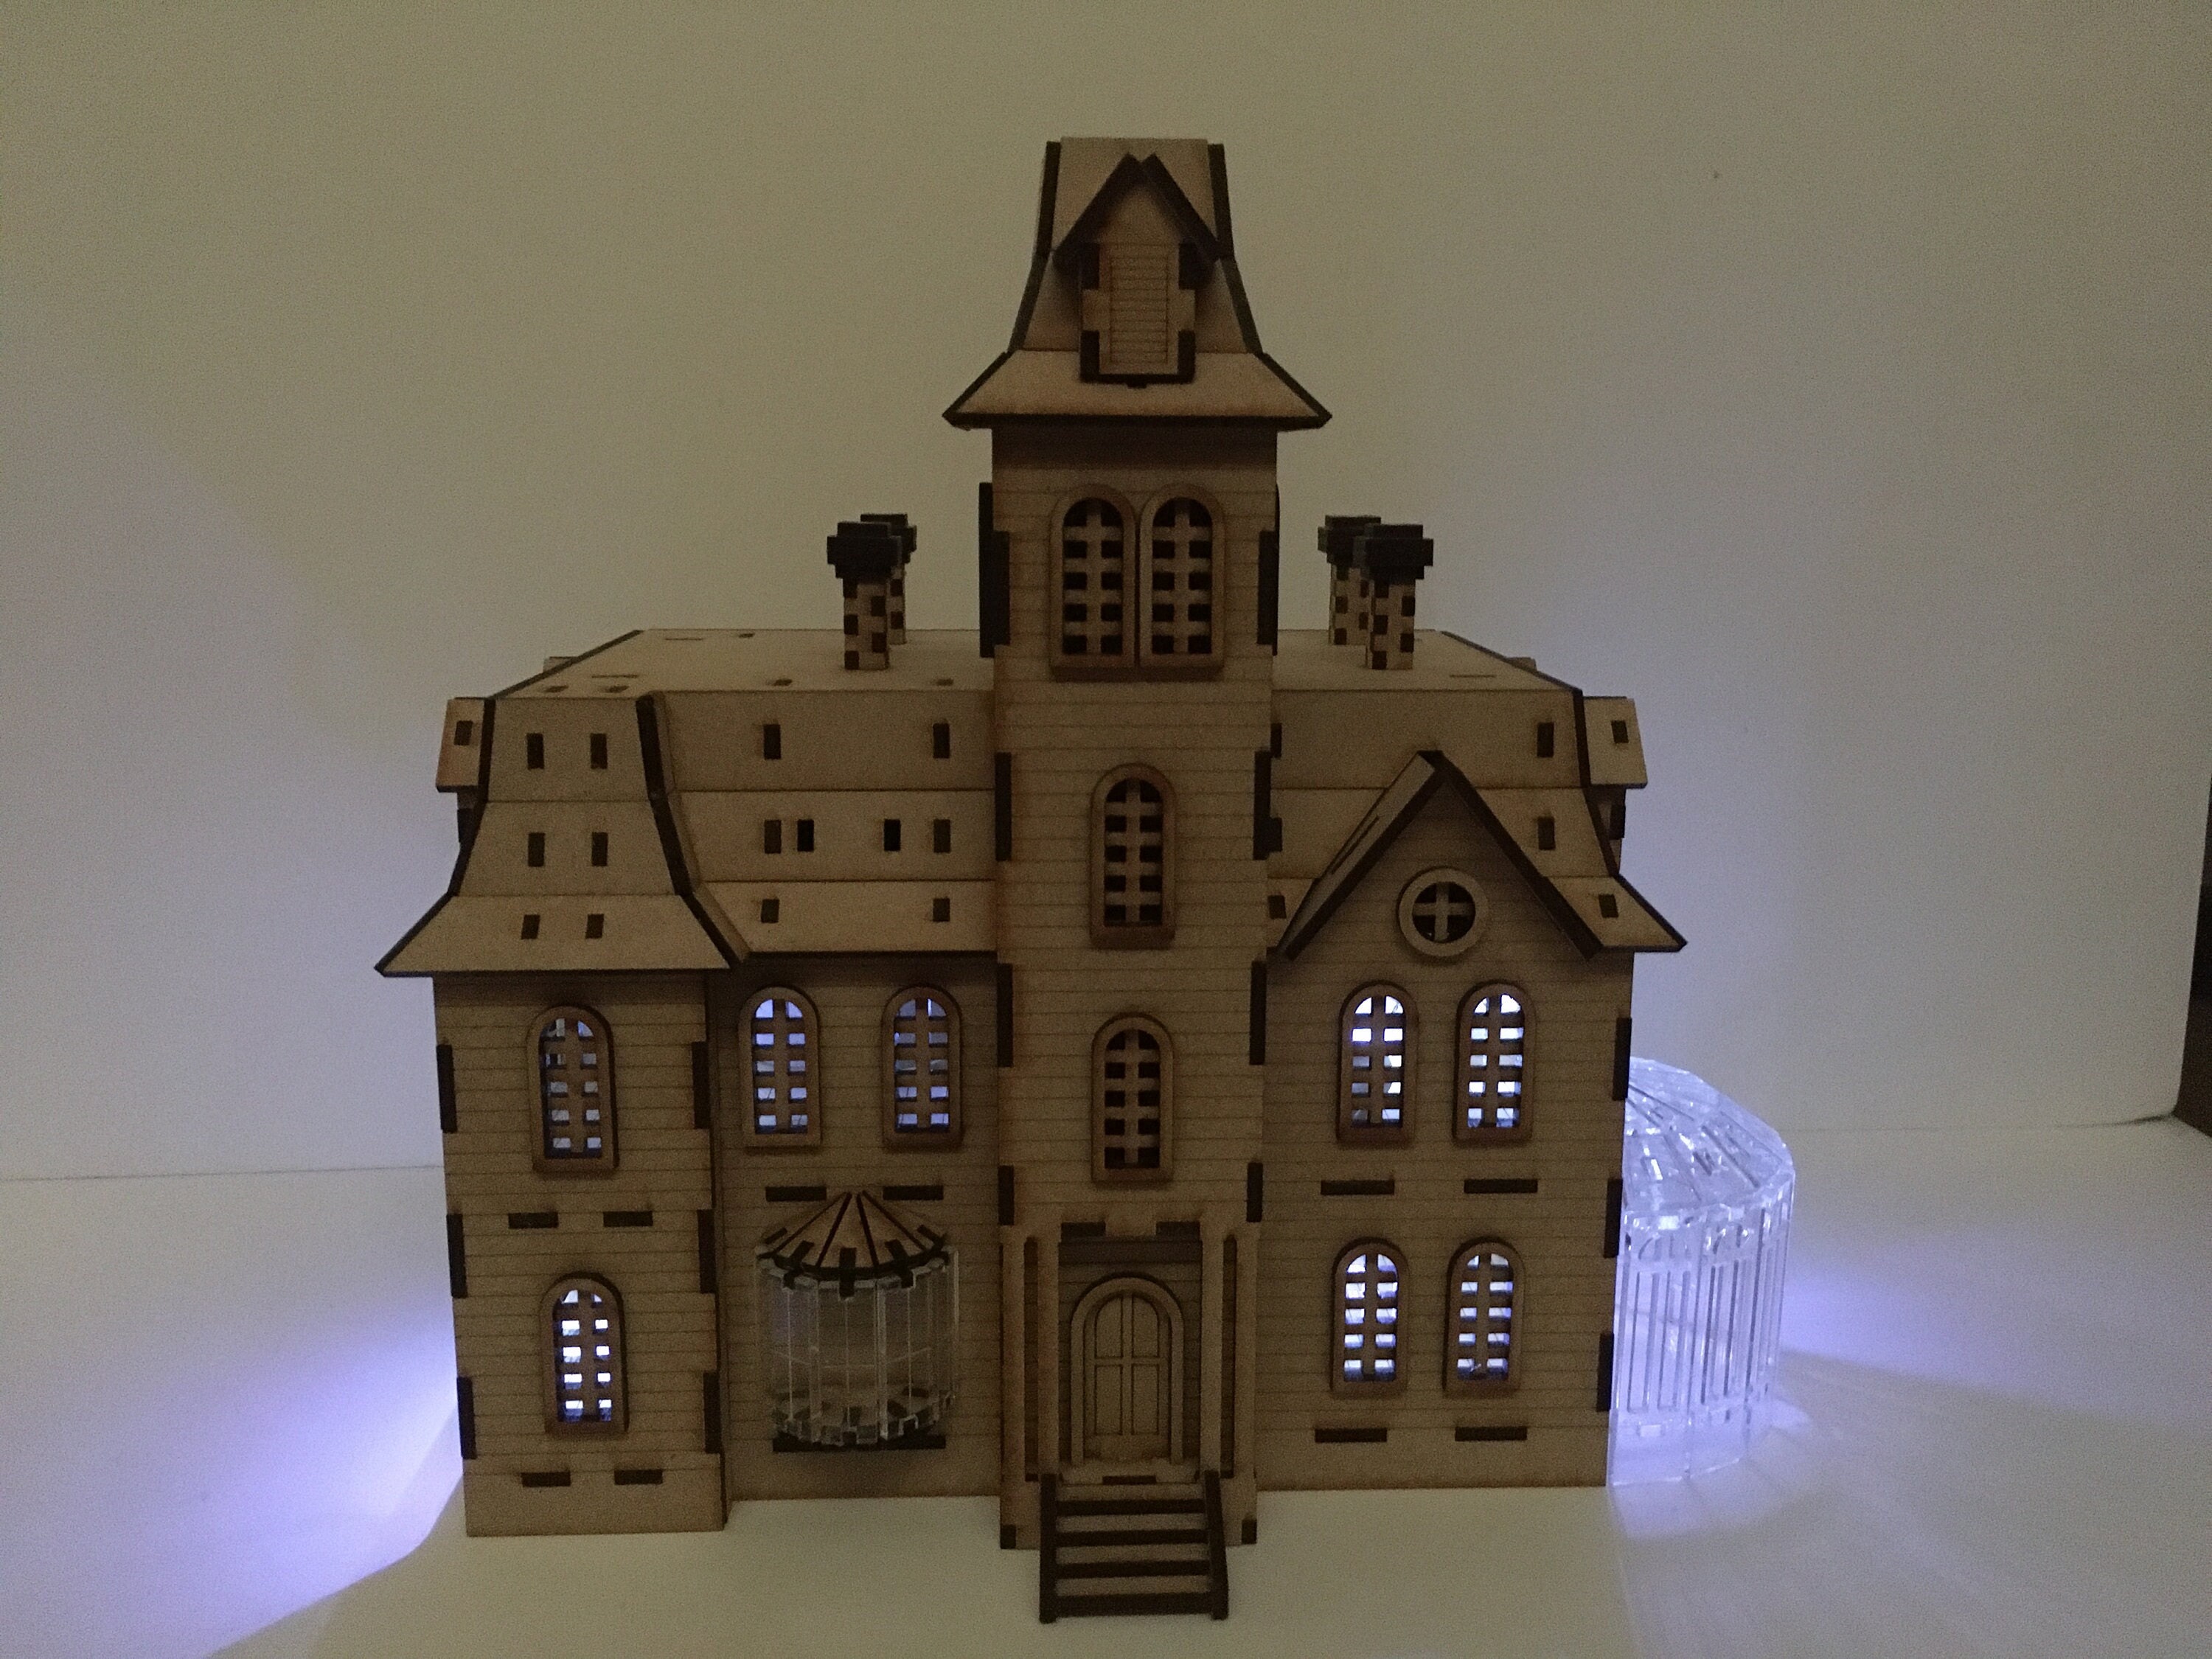 The Adams Family Inspired Christmas Handmade Ornament/Magnet/Dollhouse mini 